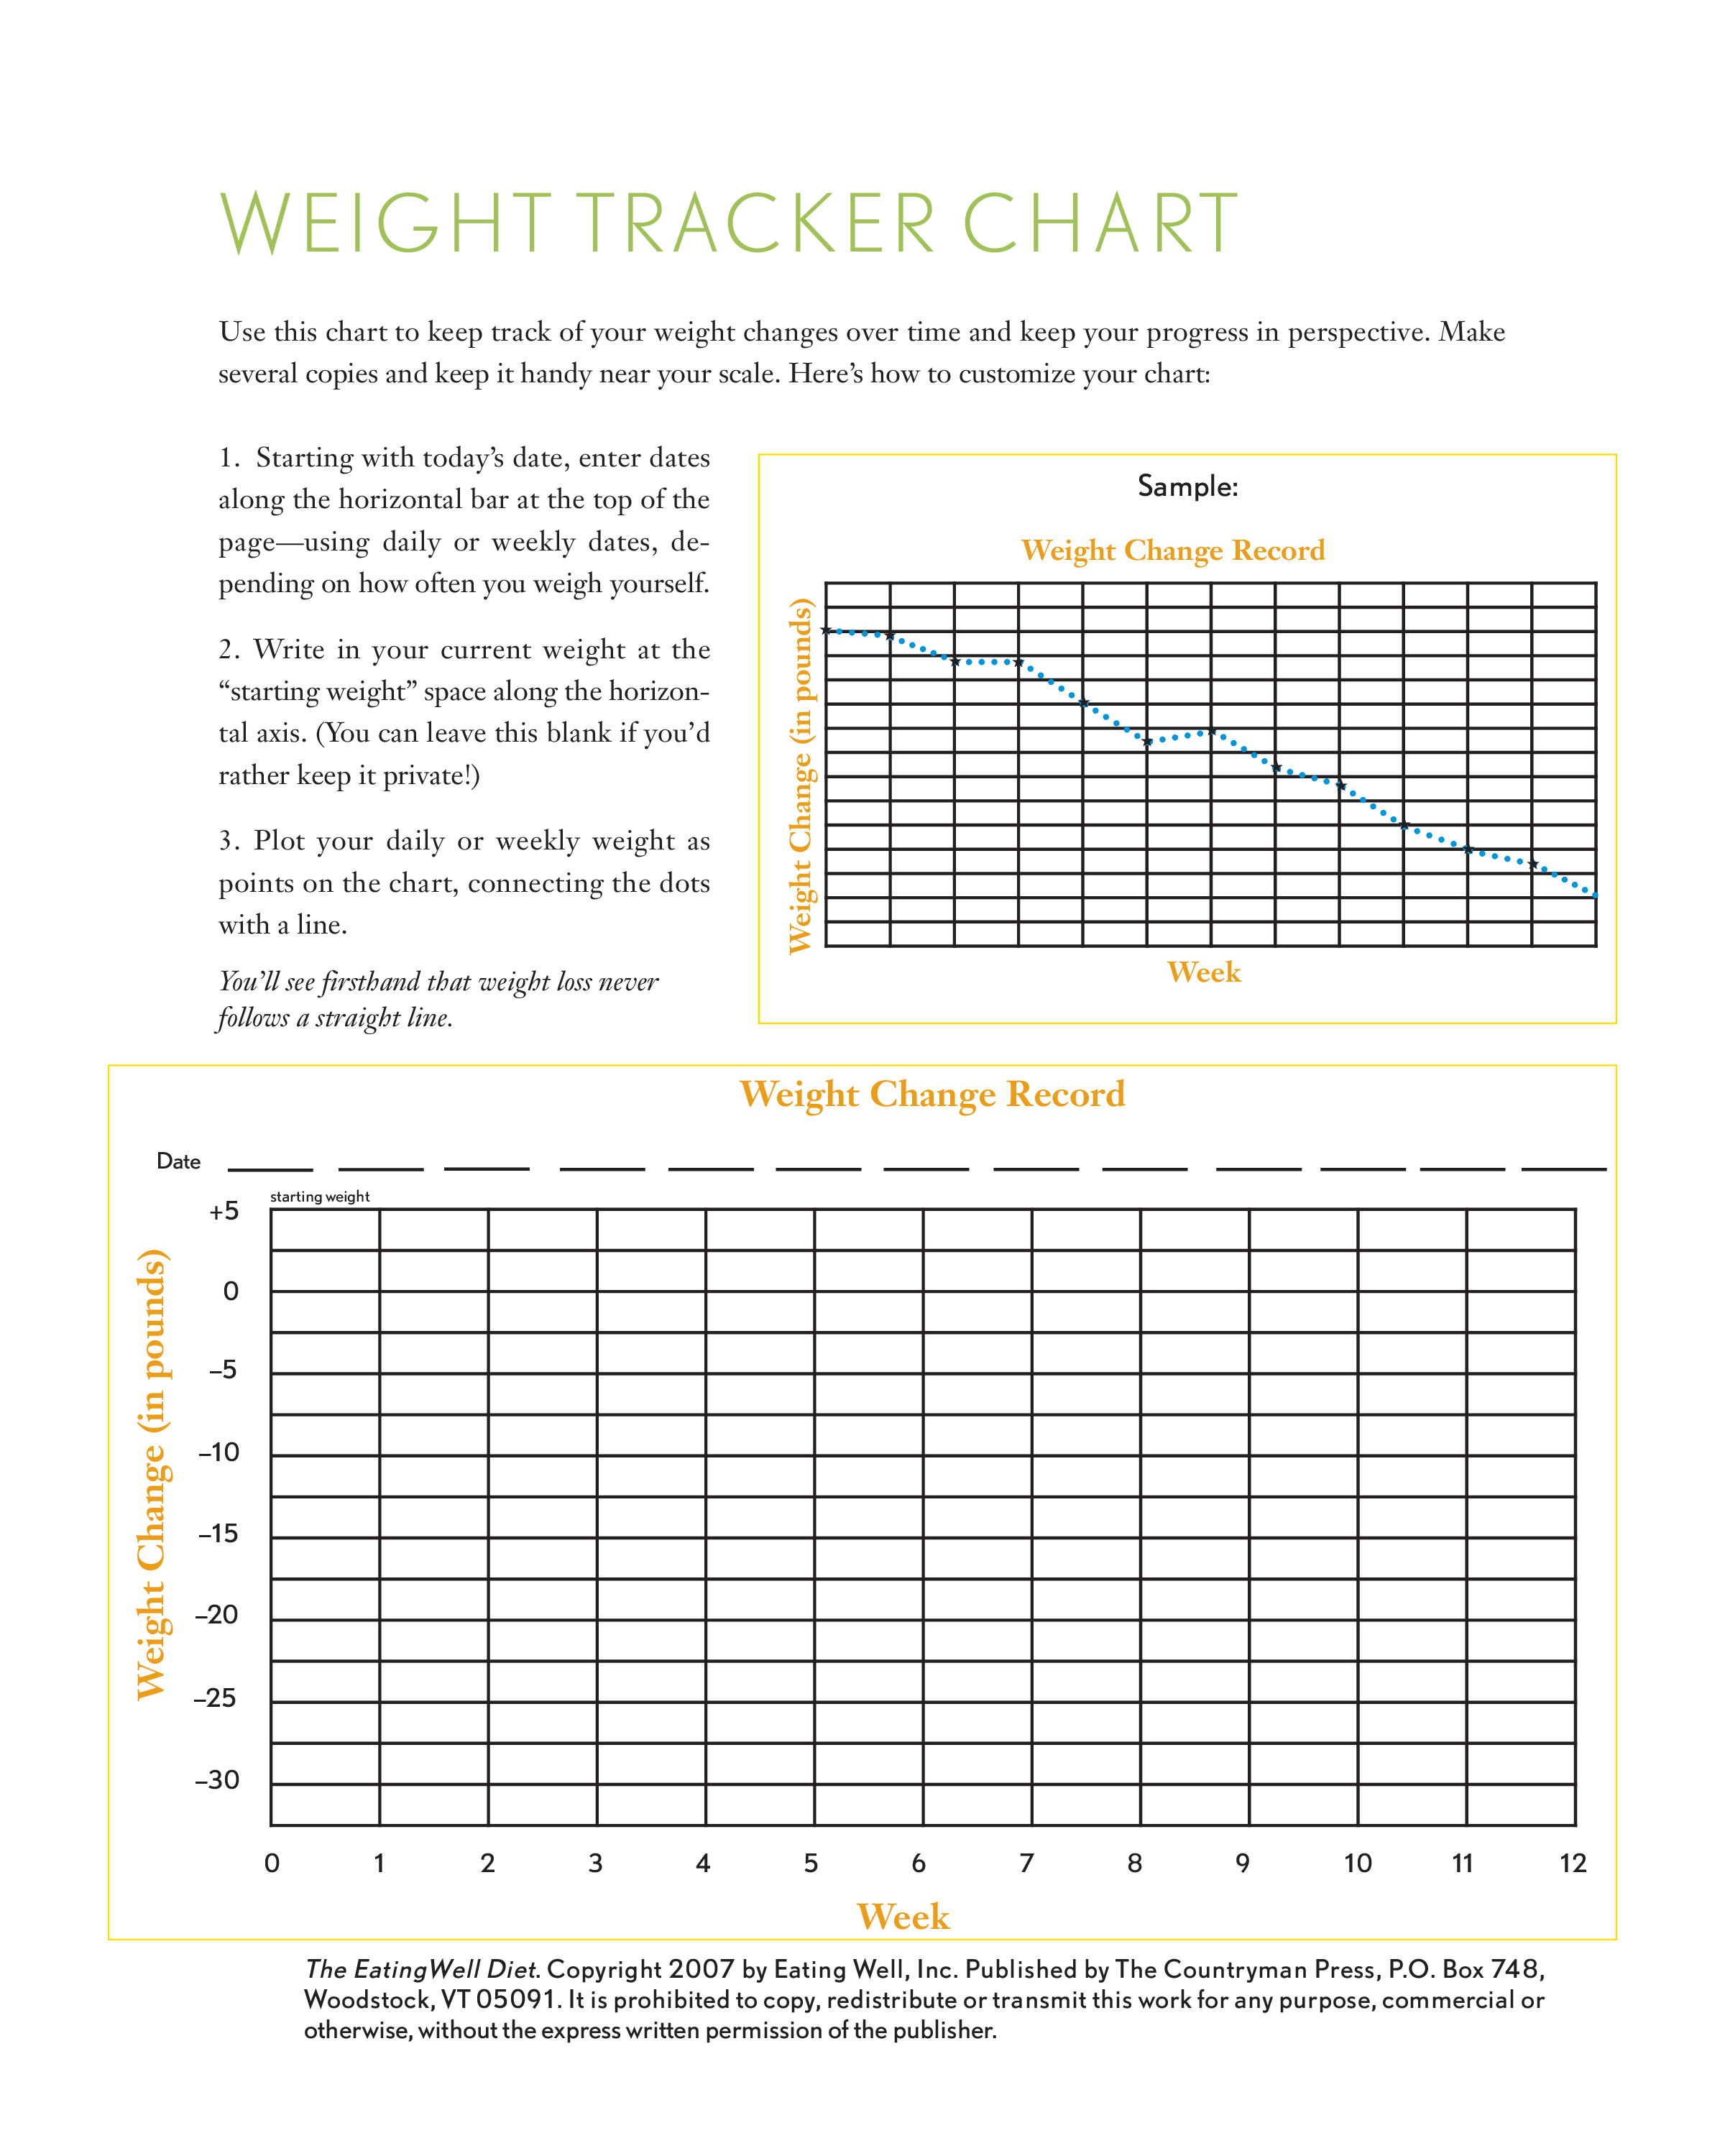 Weekly Weight Loss Tracking Chart main image